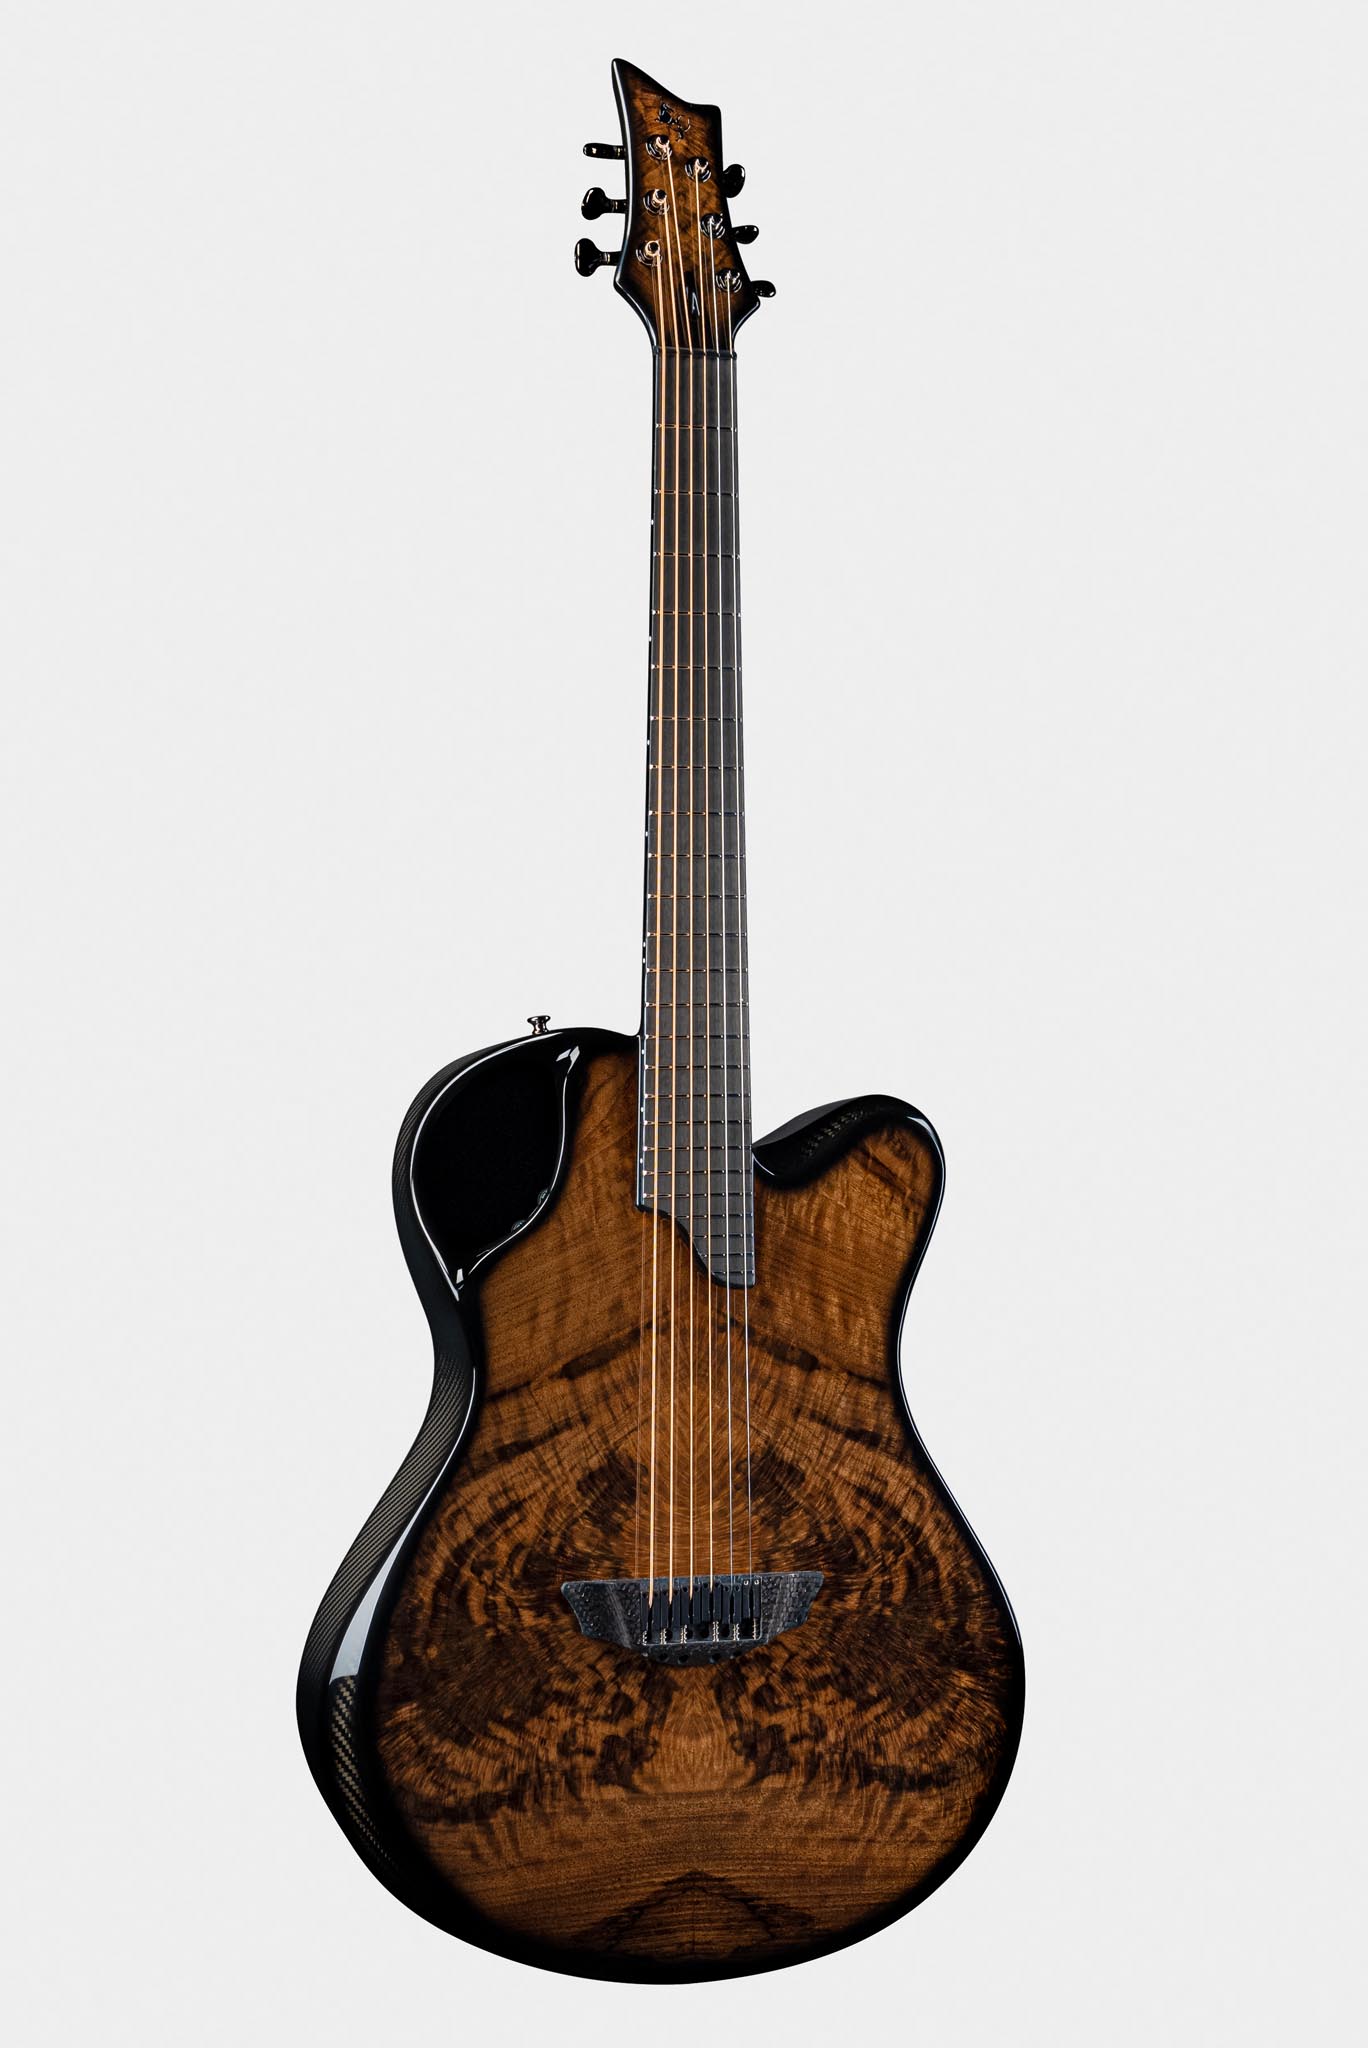 Emerald X20 Guitar with American Walnut Finish